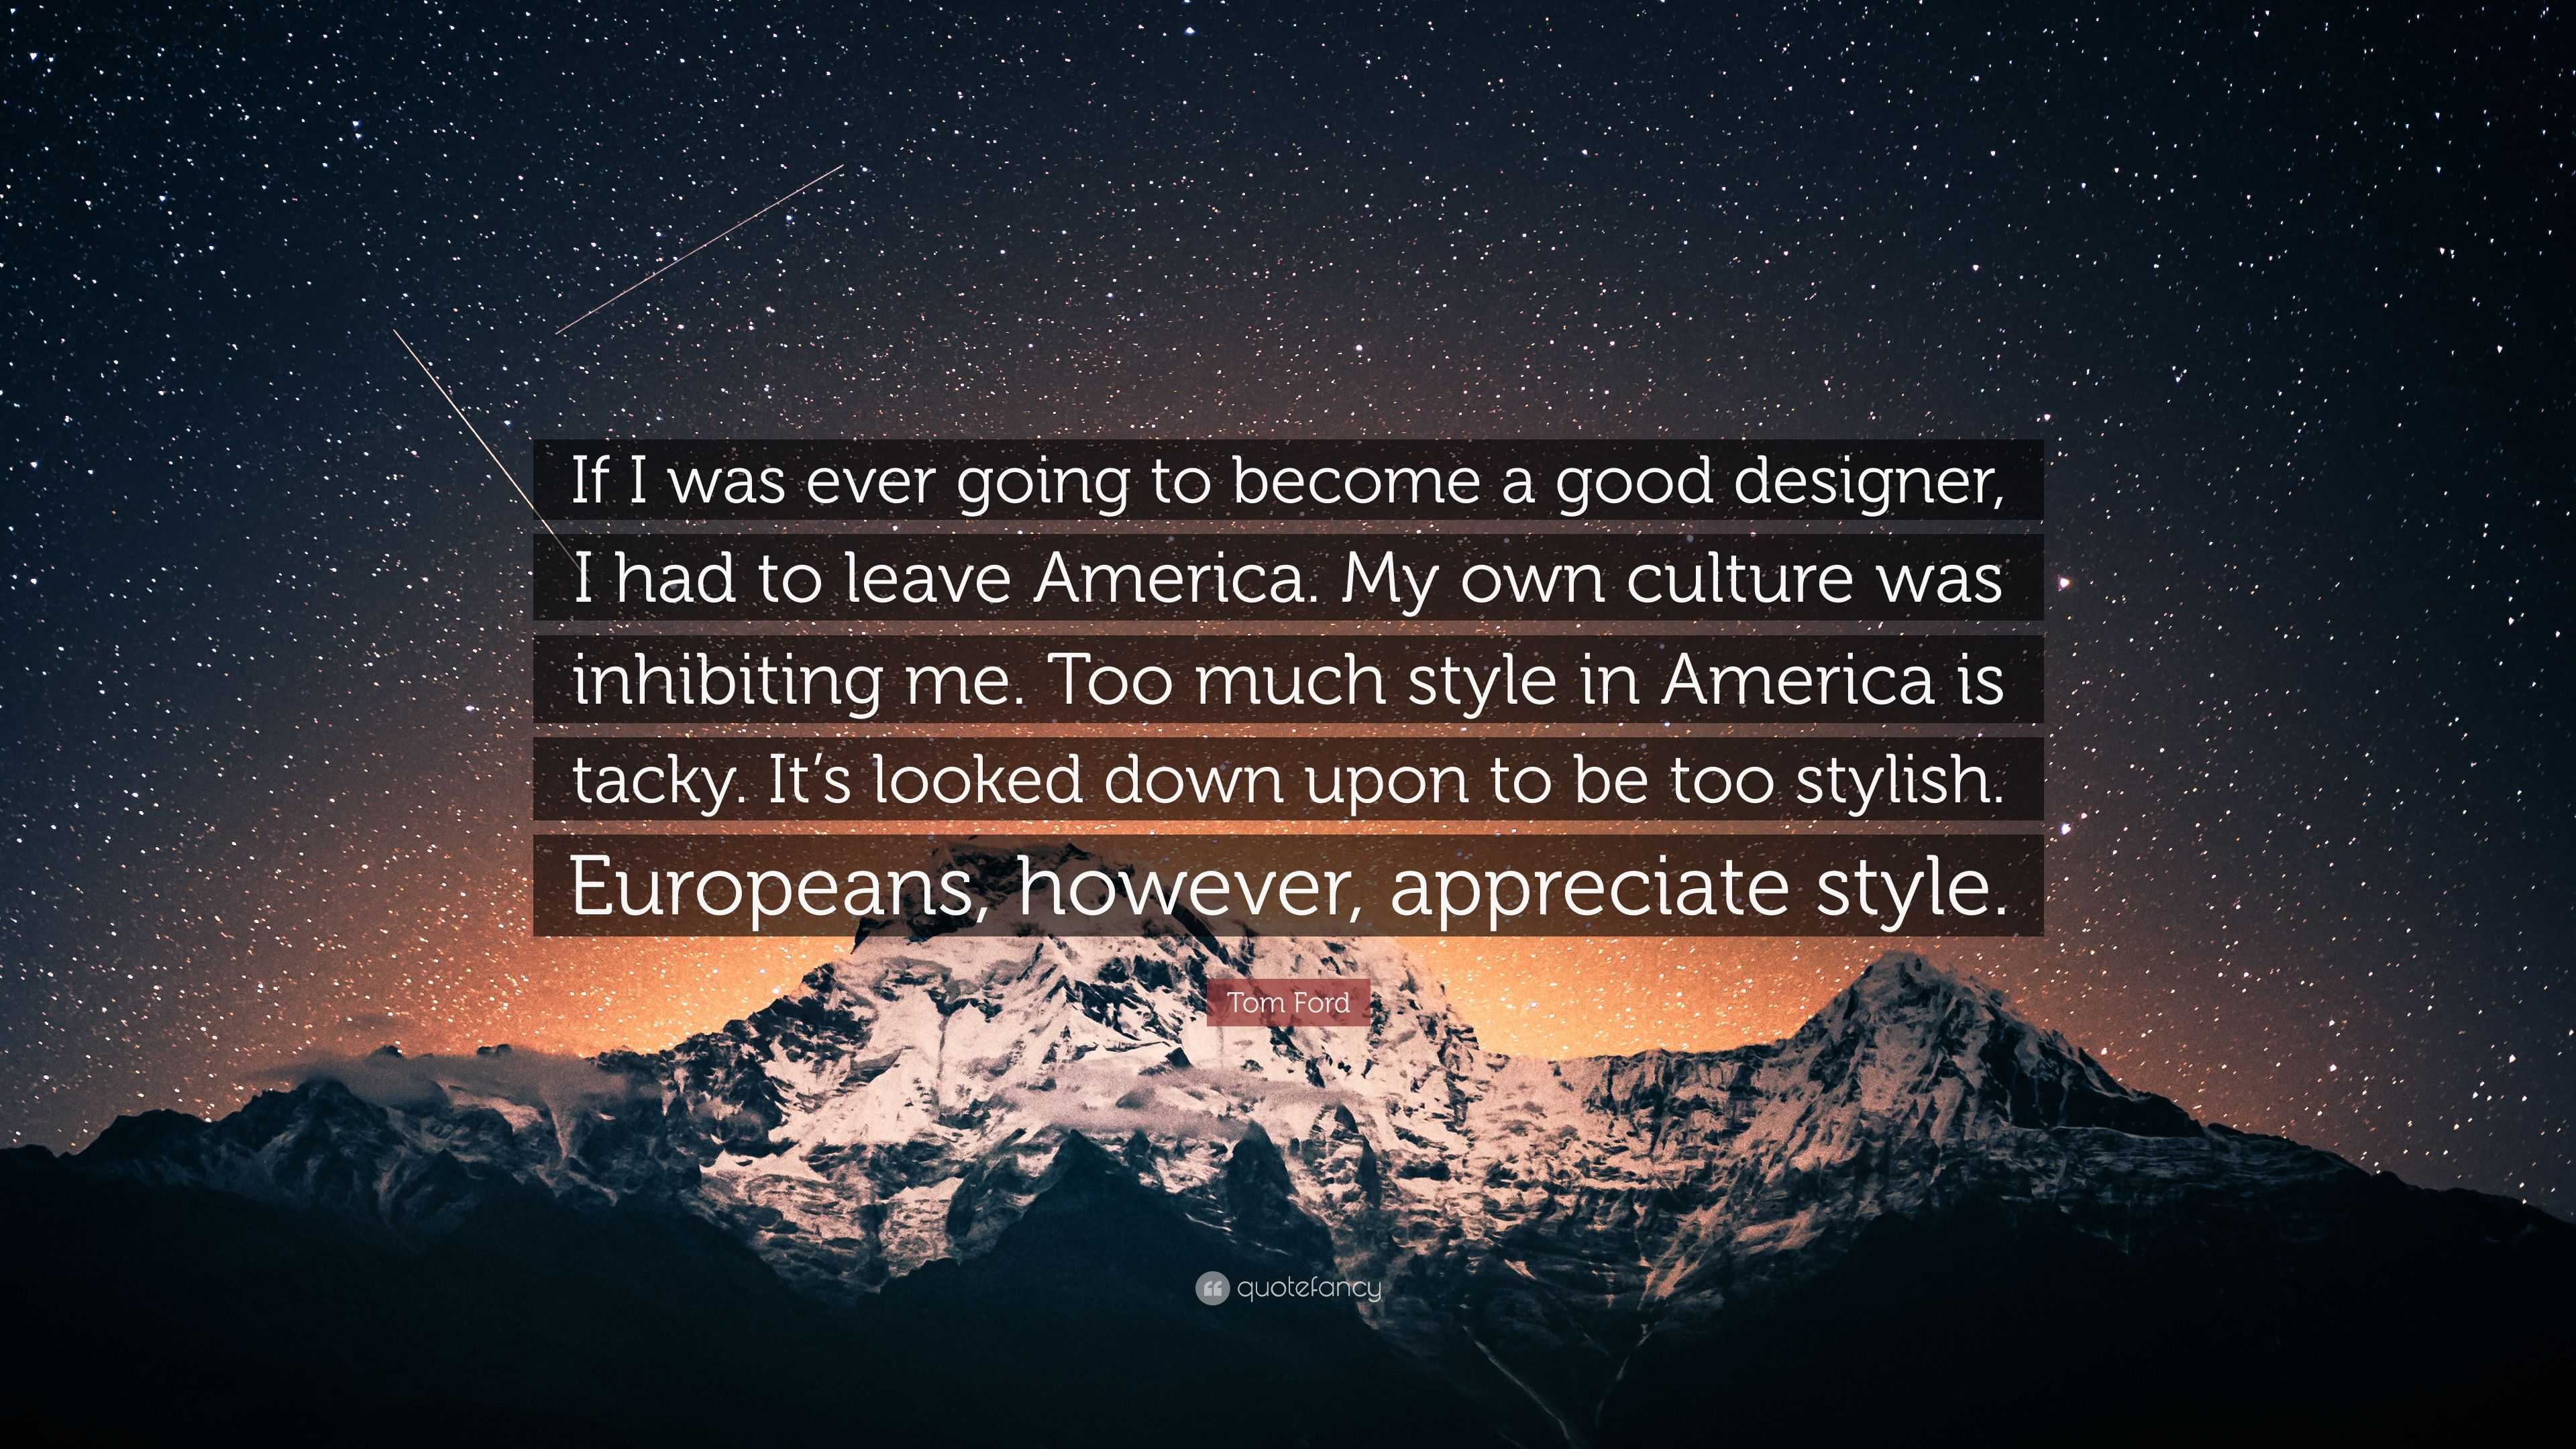 TOM FORD - “I became a fashion designer because I wanted to make